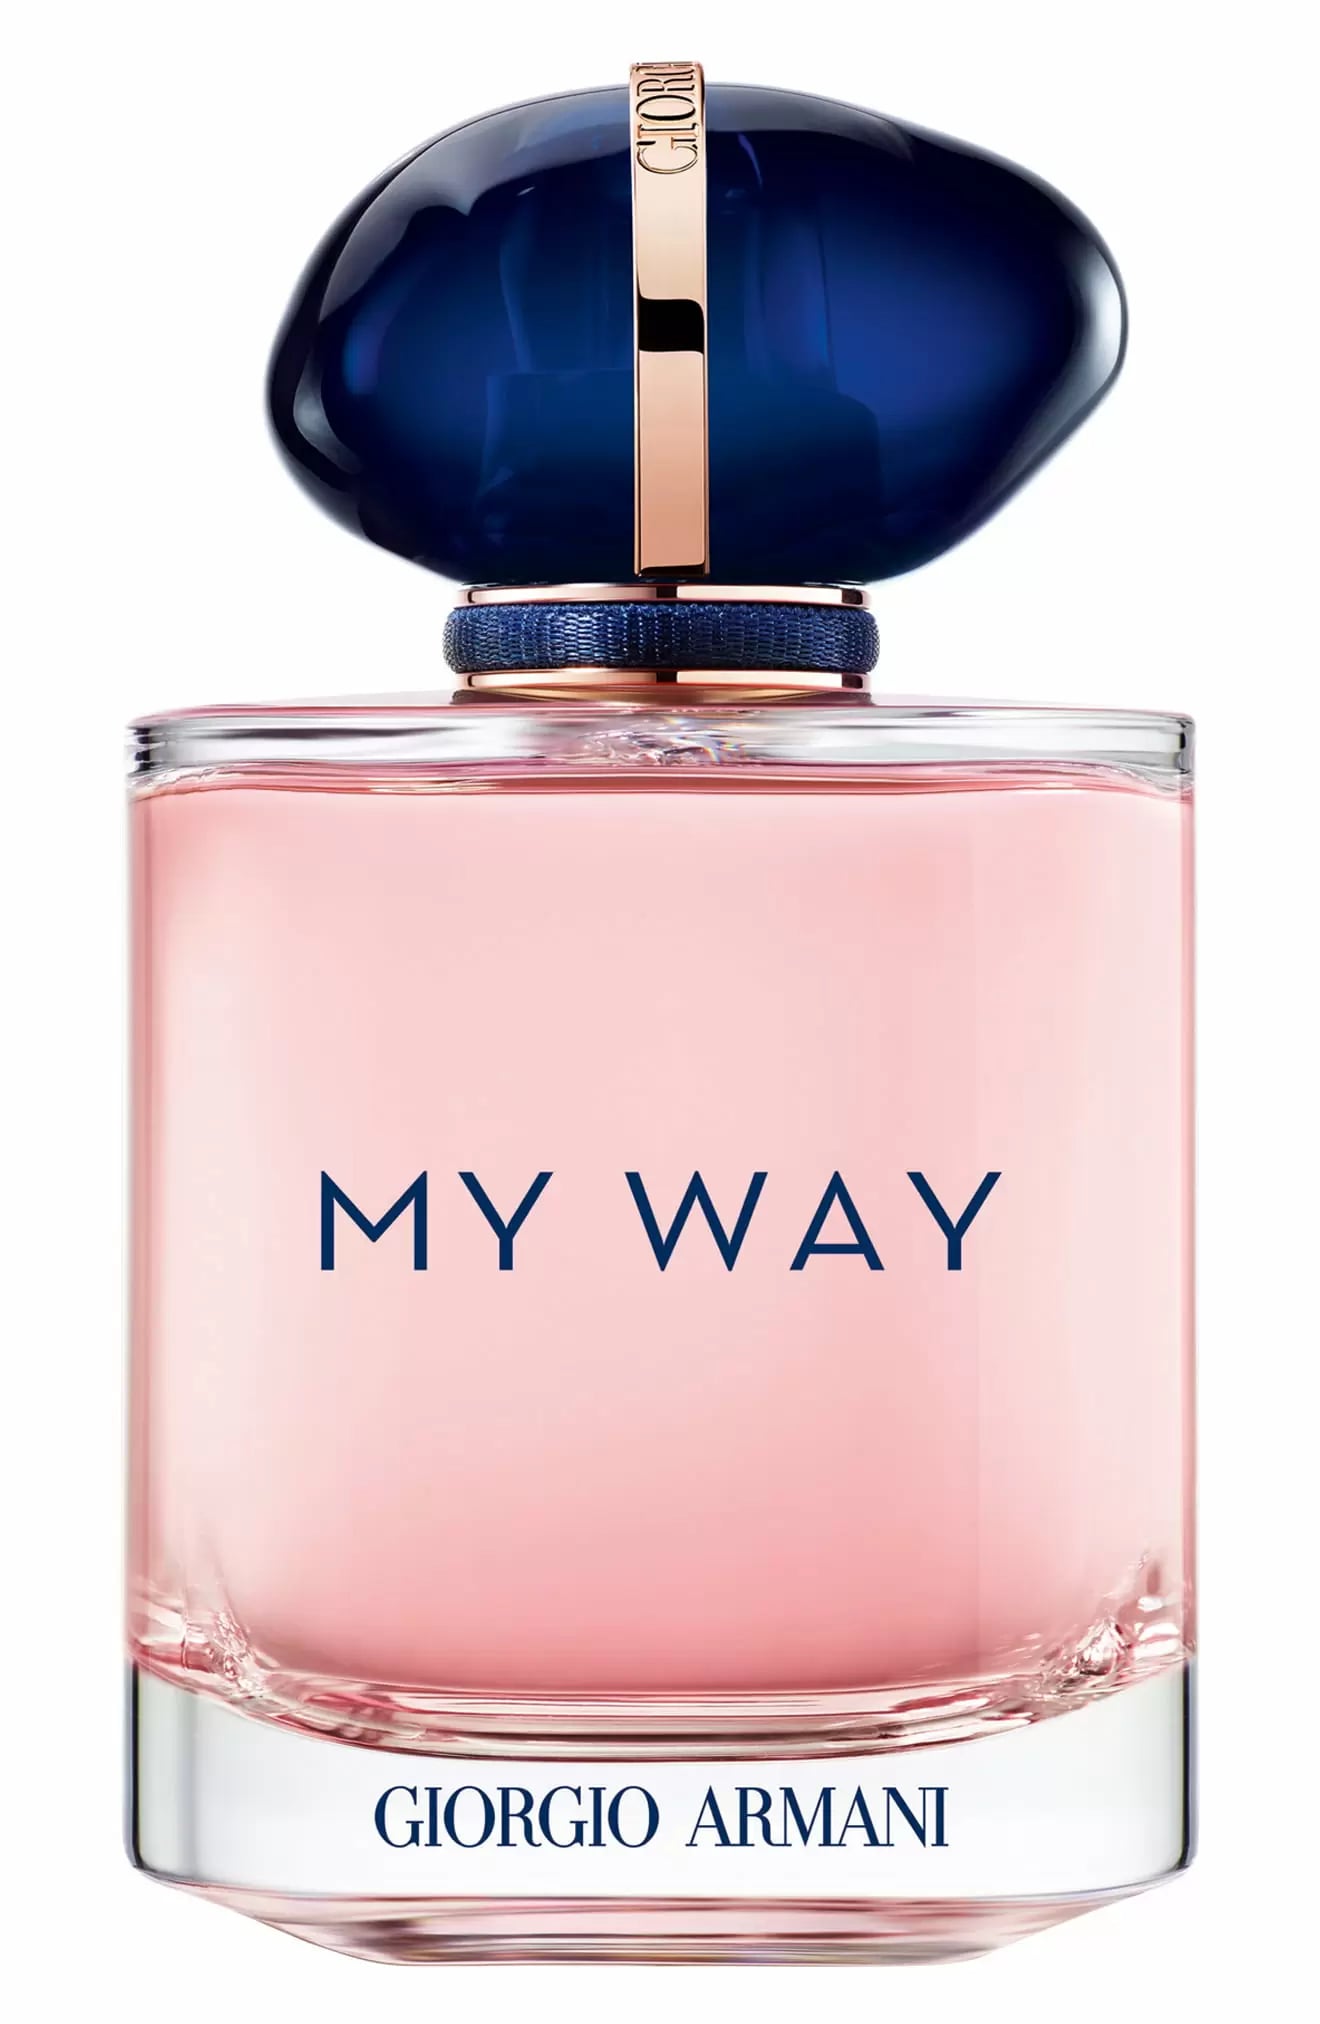 MY WAY EDP Perfume for Women by Giorgio Armani